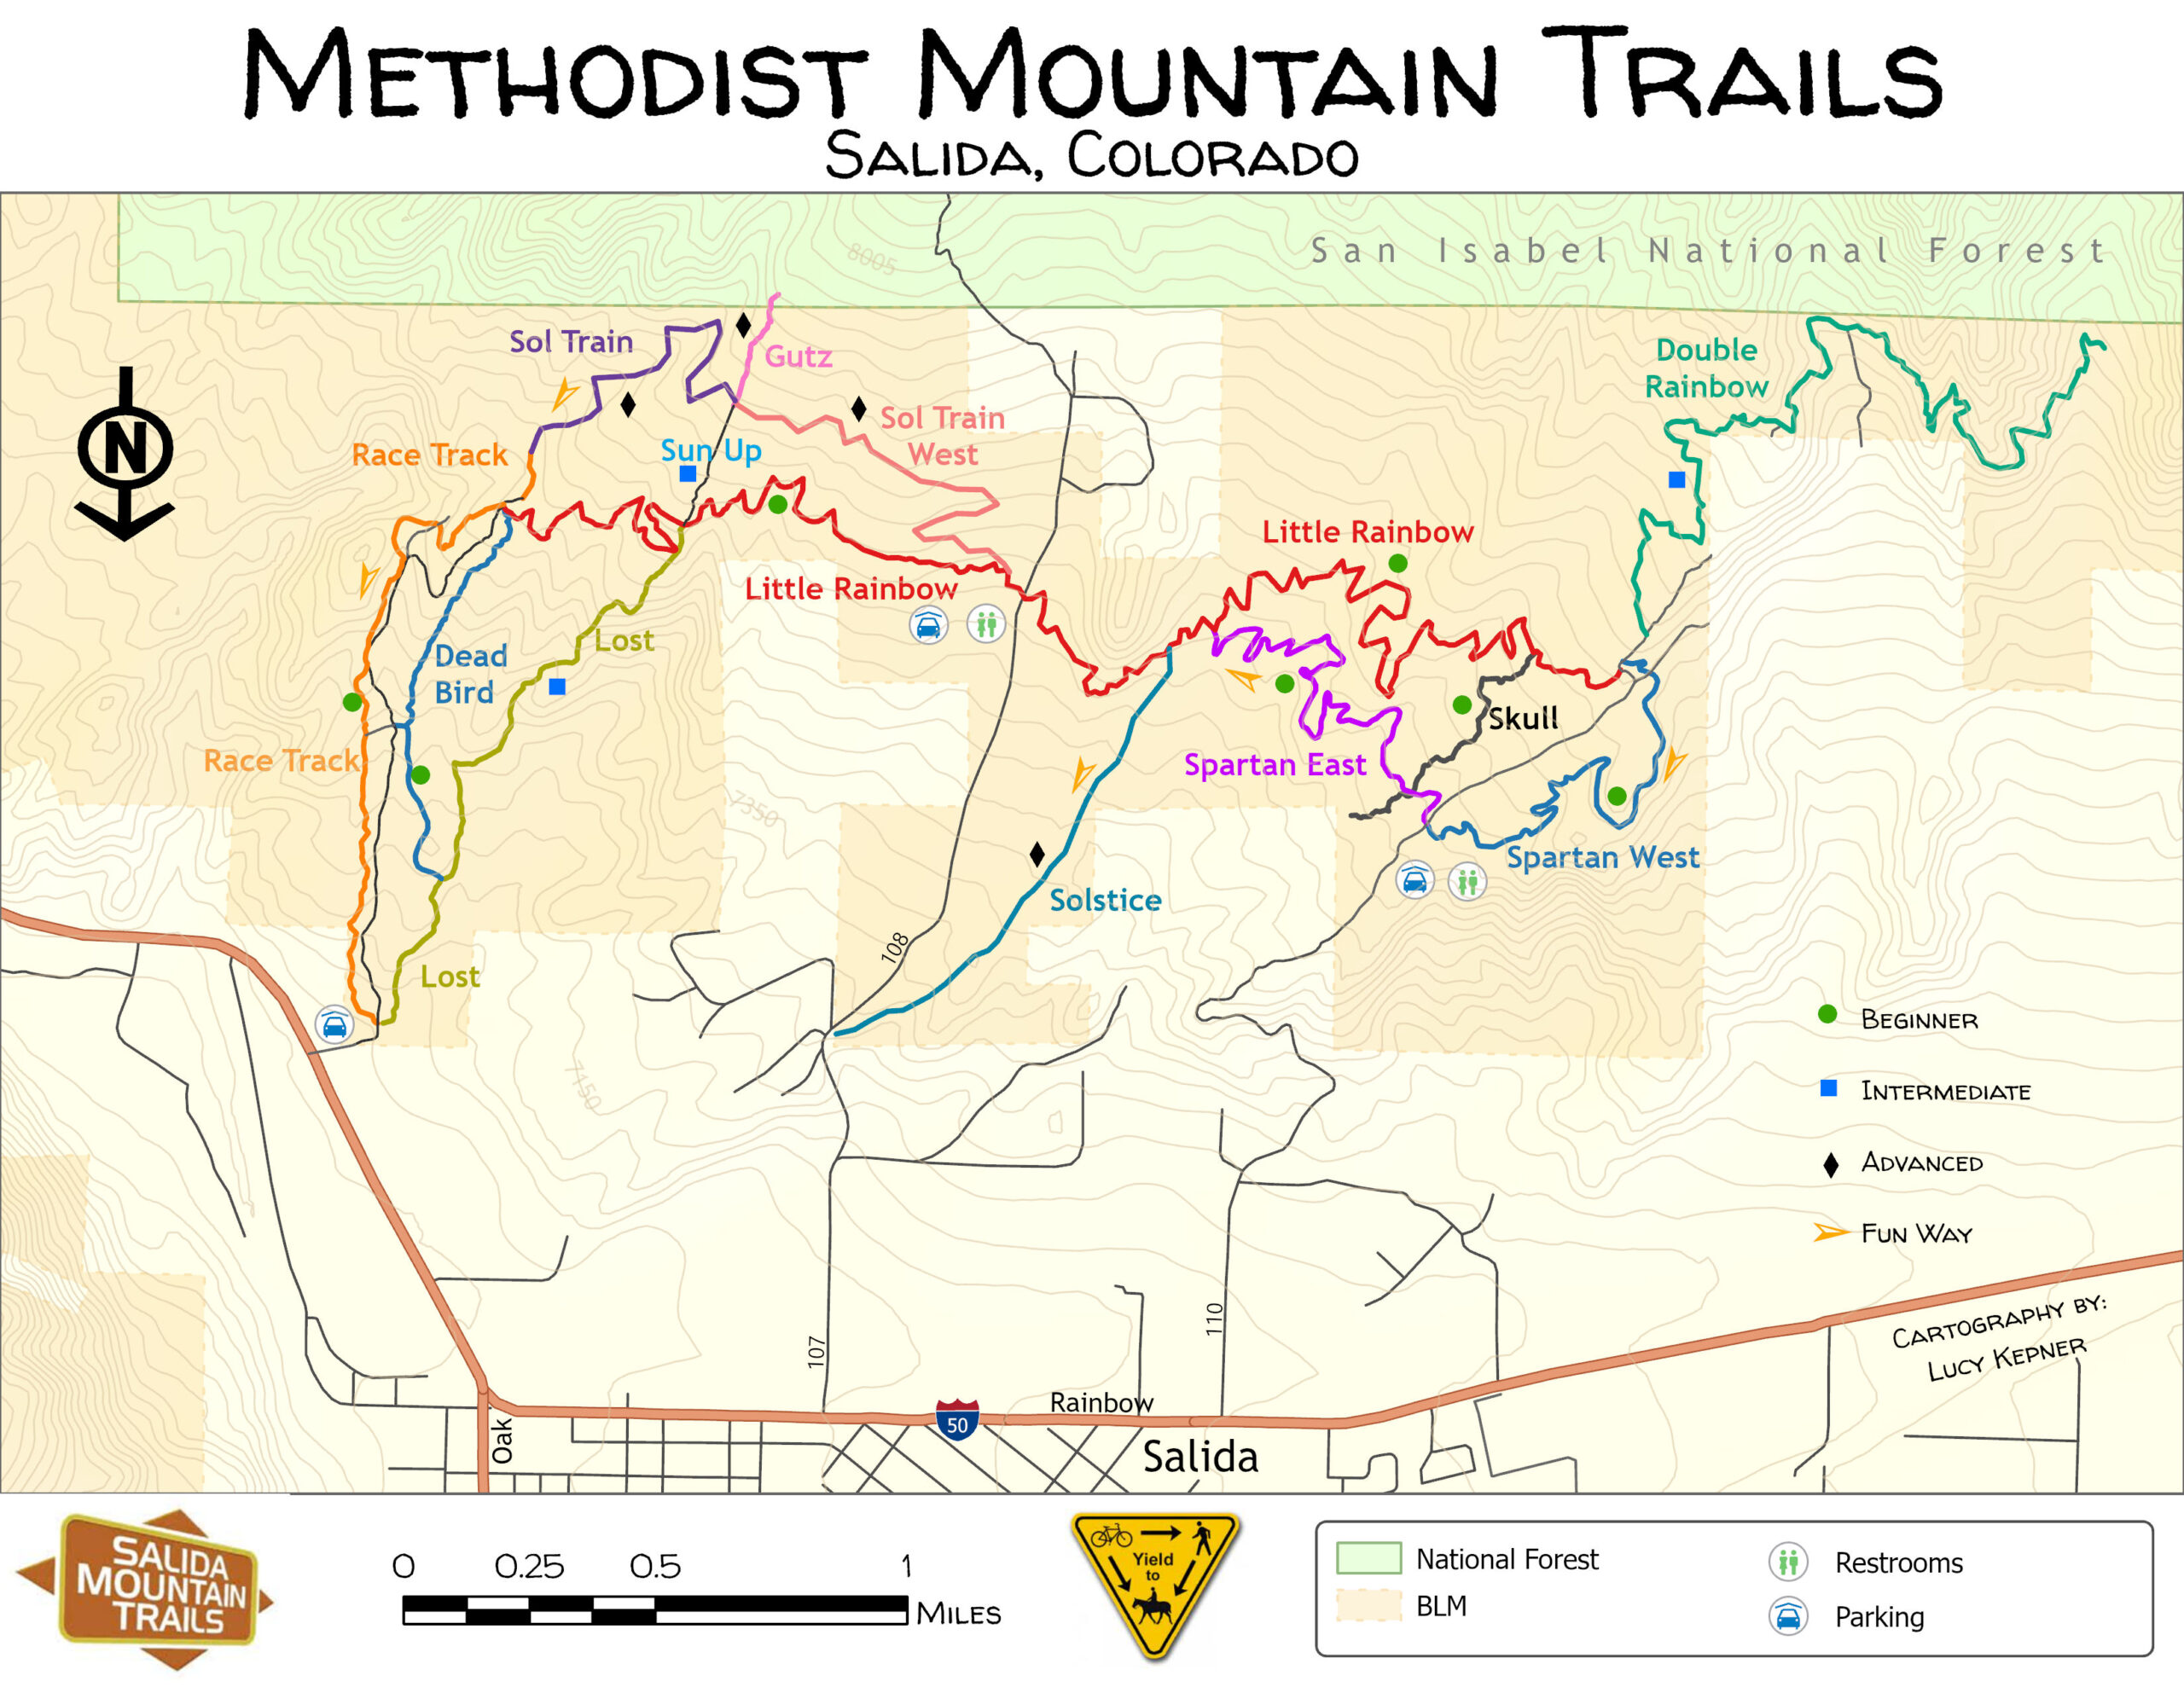 Methodist Mountain Trail Map, Lucy Kepner